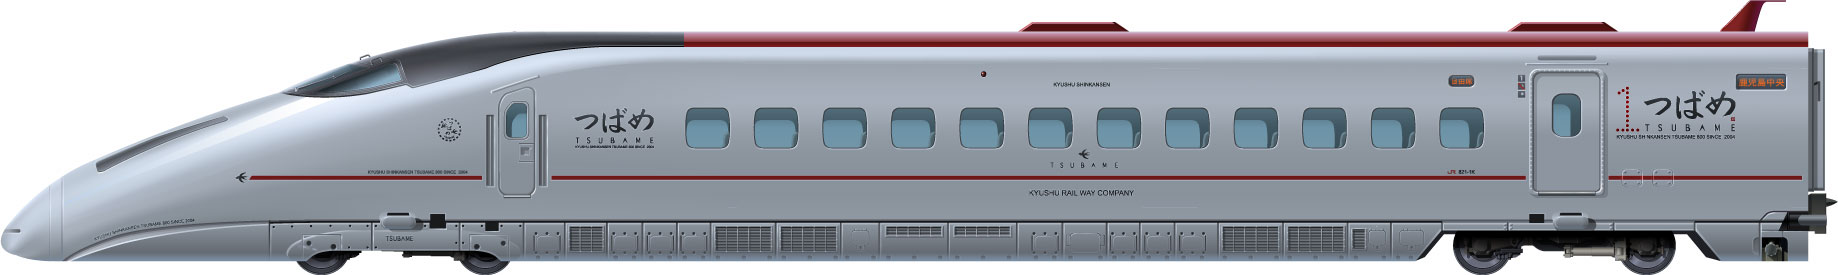 Jr 新幹線800系 サイドビューイラスト